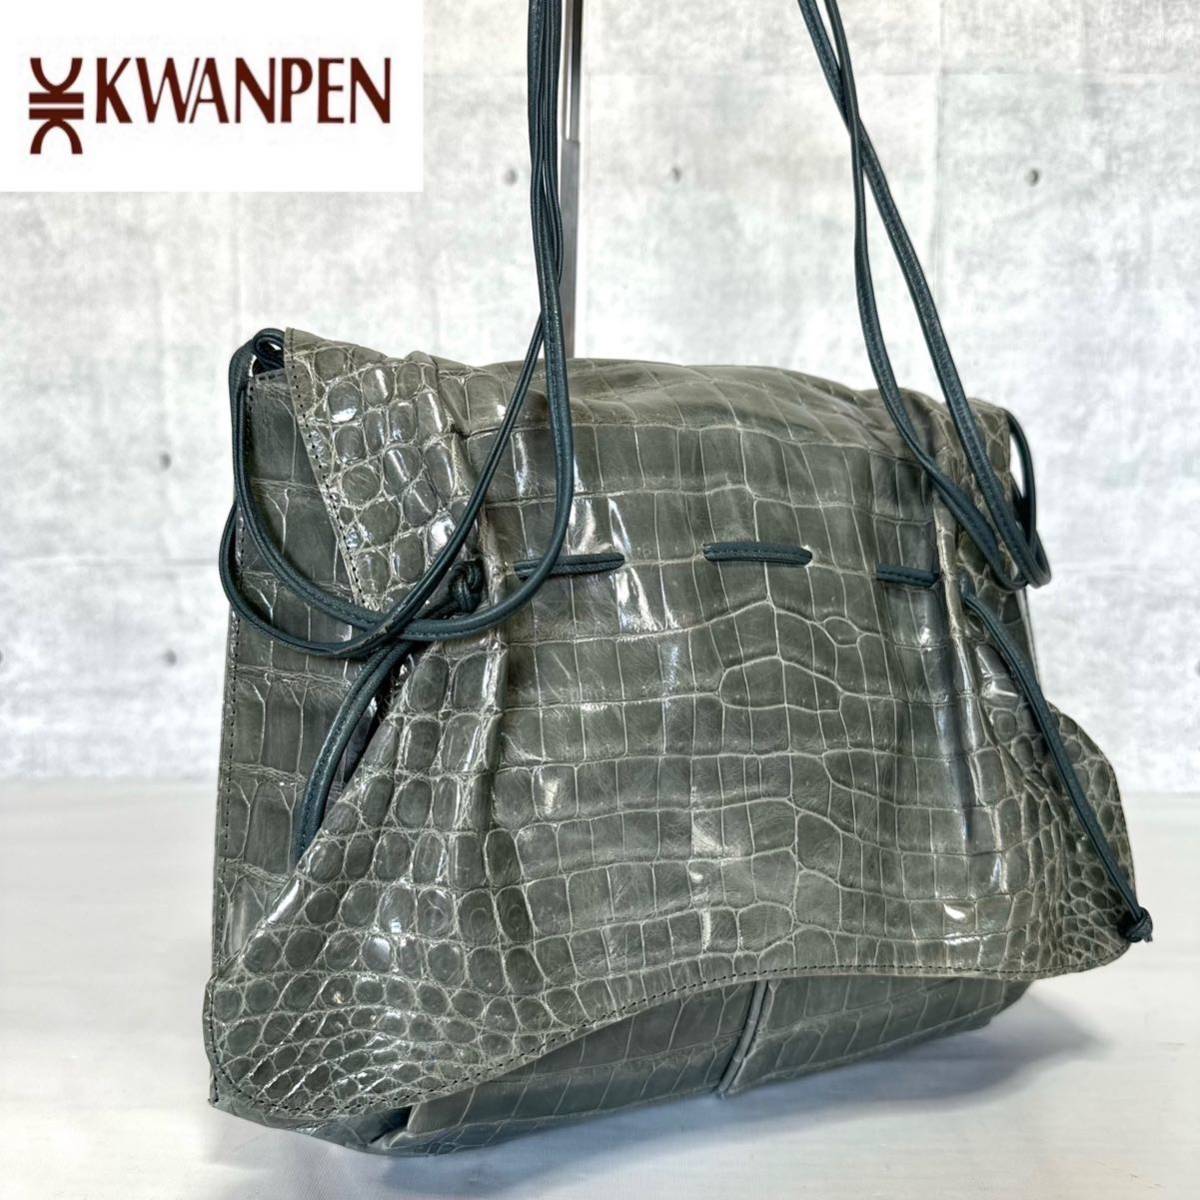  superior article KWANPENk one pen crocodile khaki gray wani leather original leather diagonal .. handbag tote bag shoulder bag 